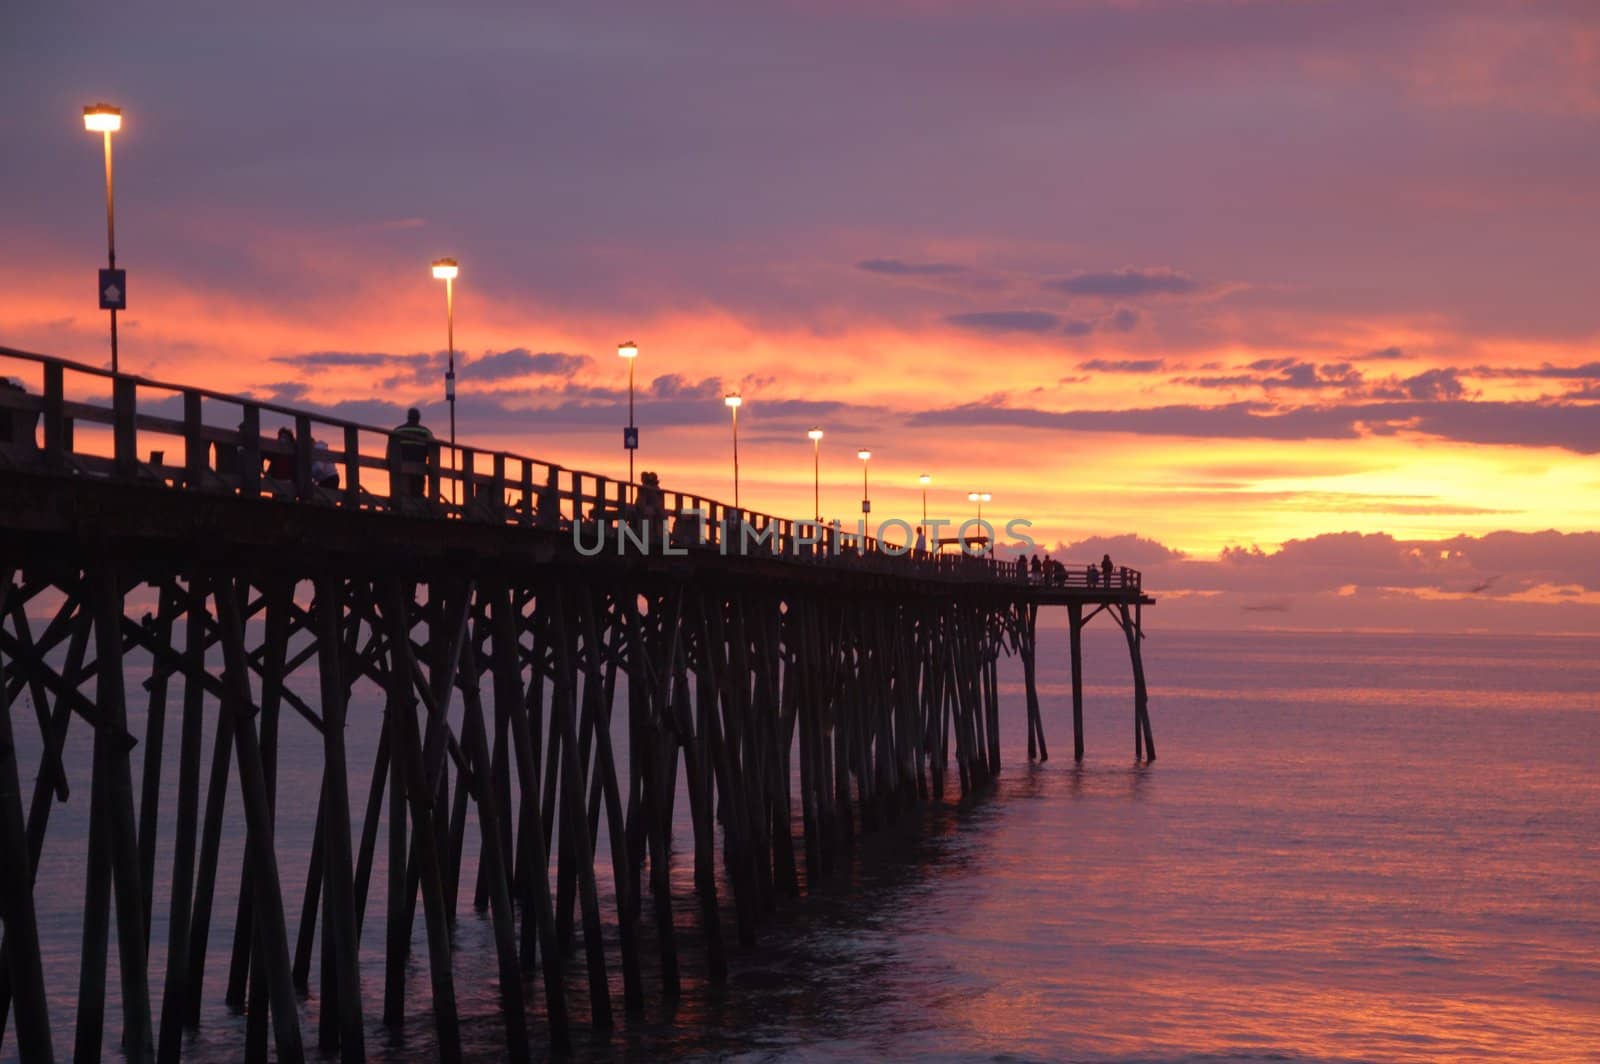 The sunrise over the pier at Kure Beach. 